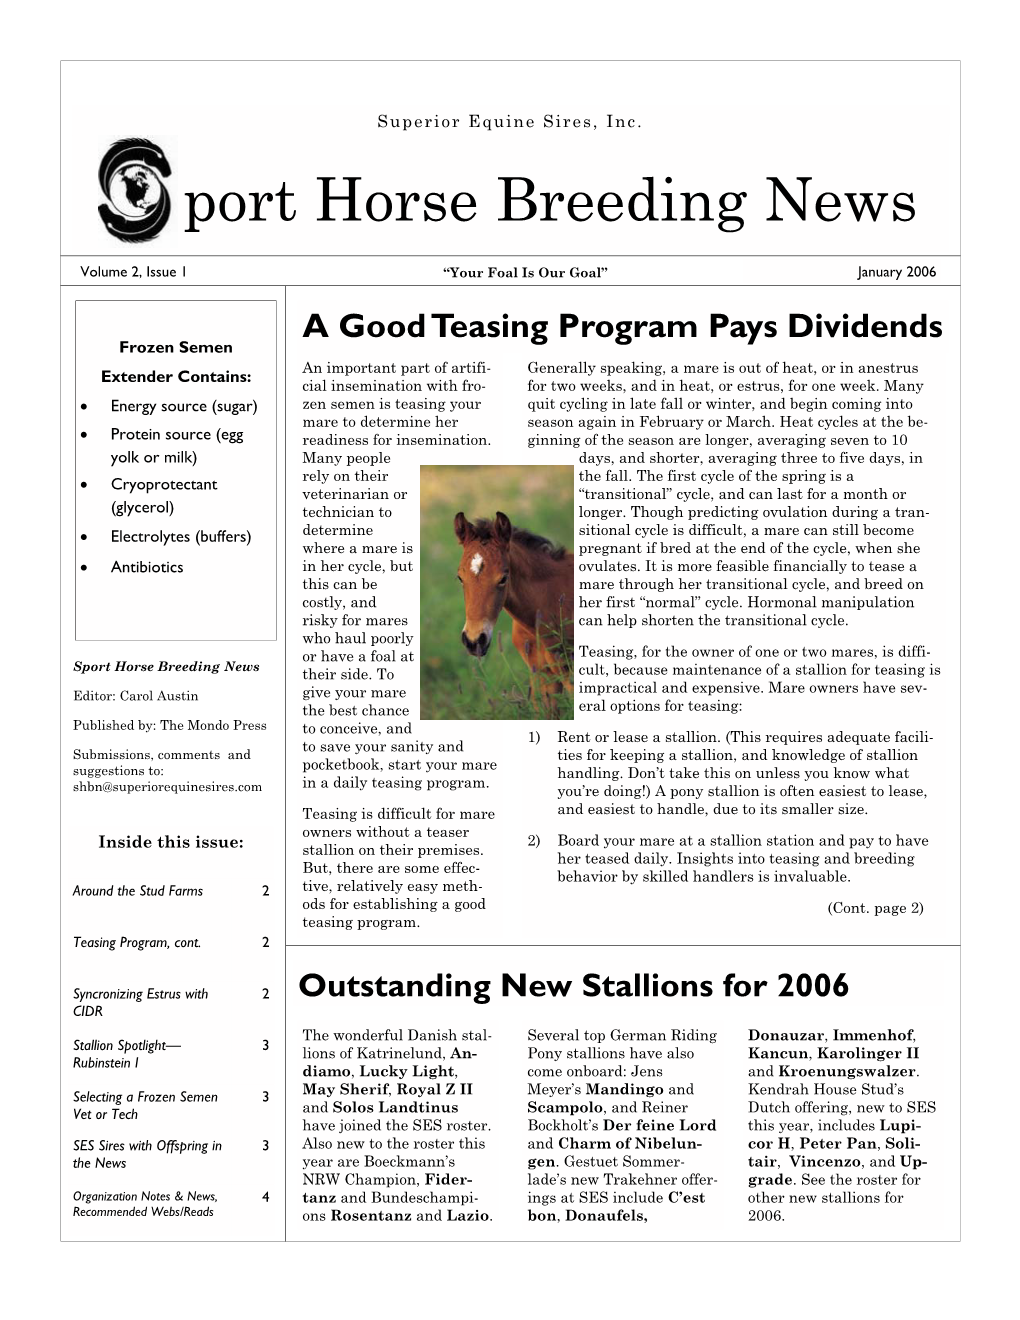 Port Horse Breeding News